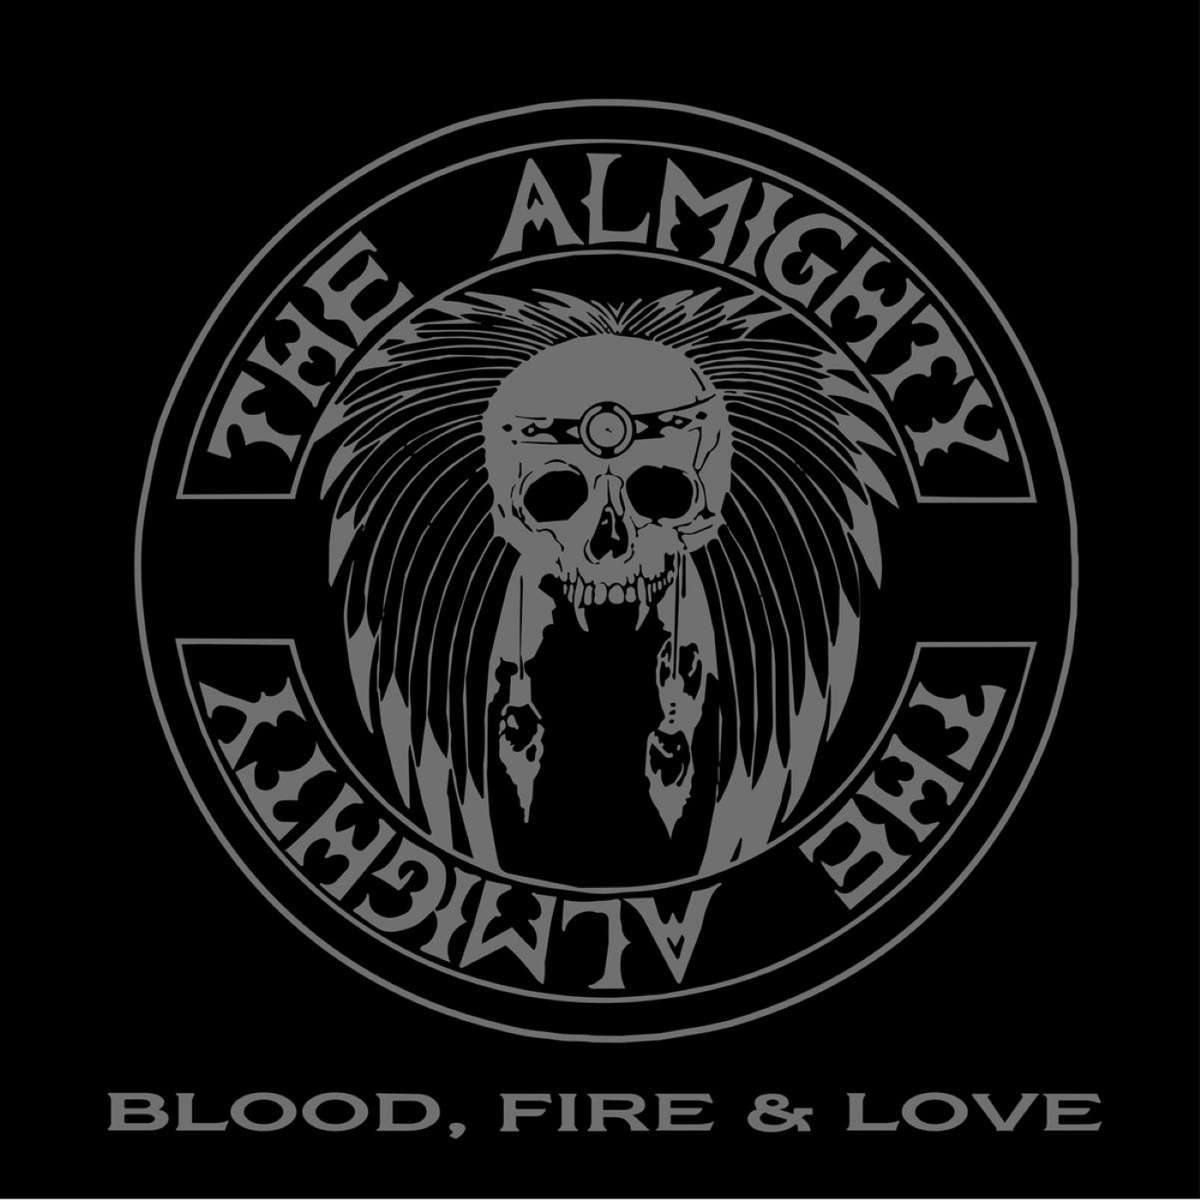 The Almighty (SCO) – Blood, Fire & Love und Soul Destruction